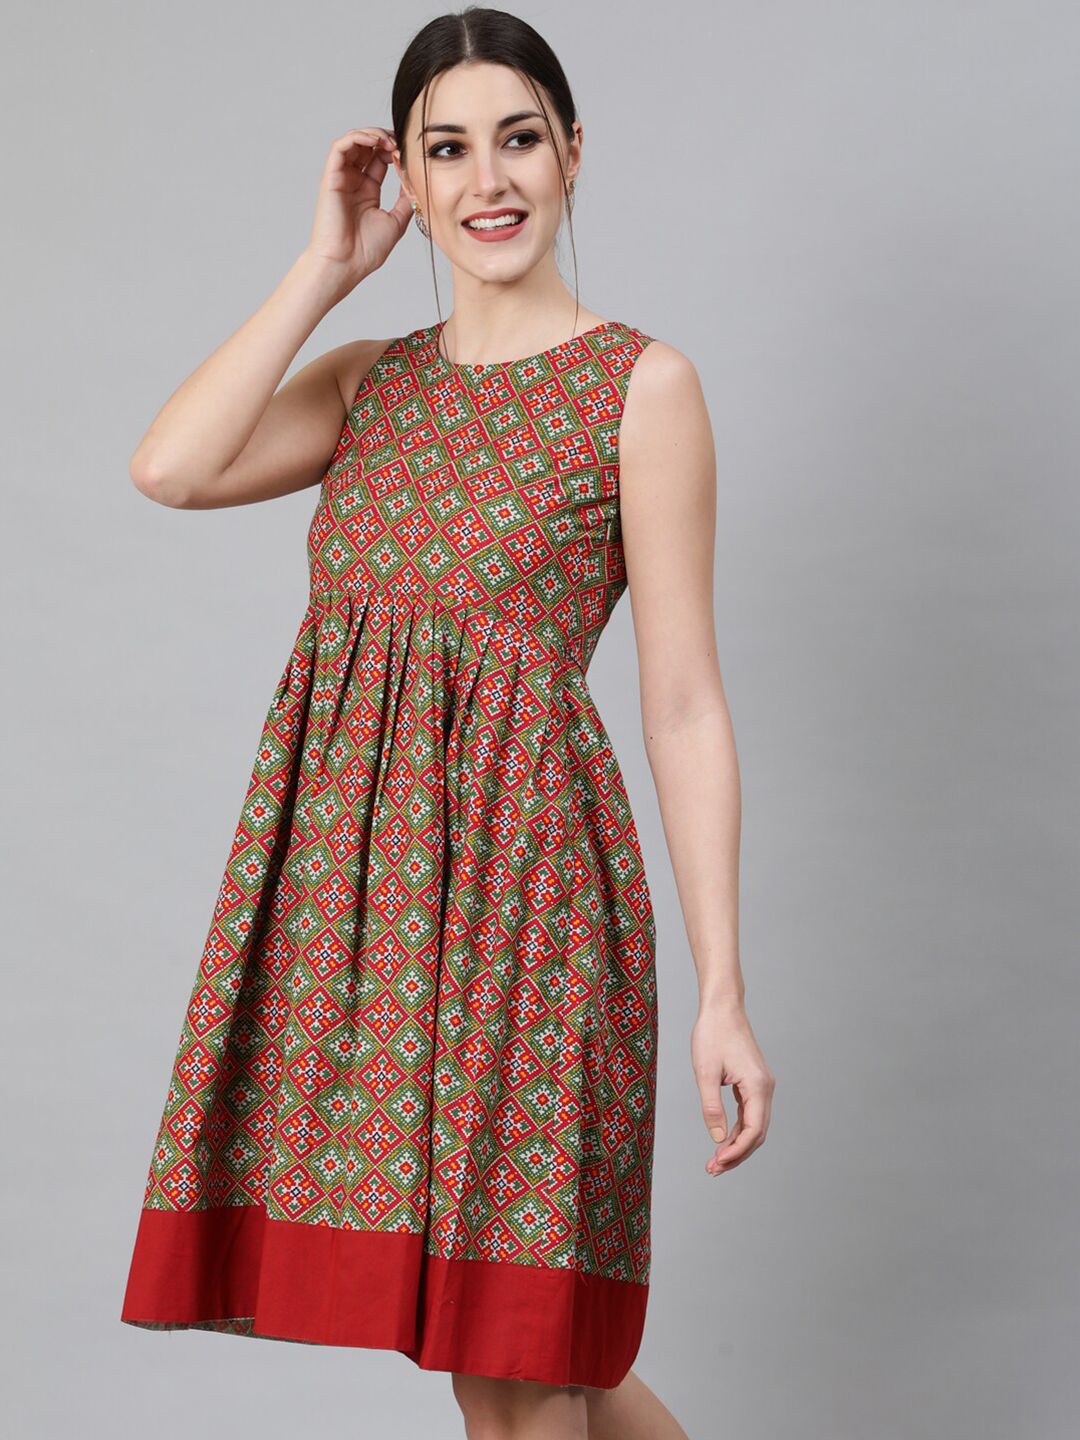 Awadhi Red Ethnic Motifs Dress Price in India